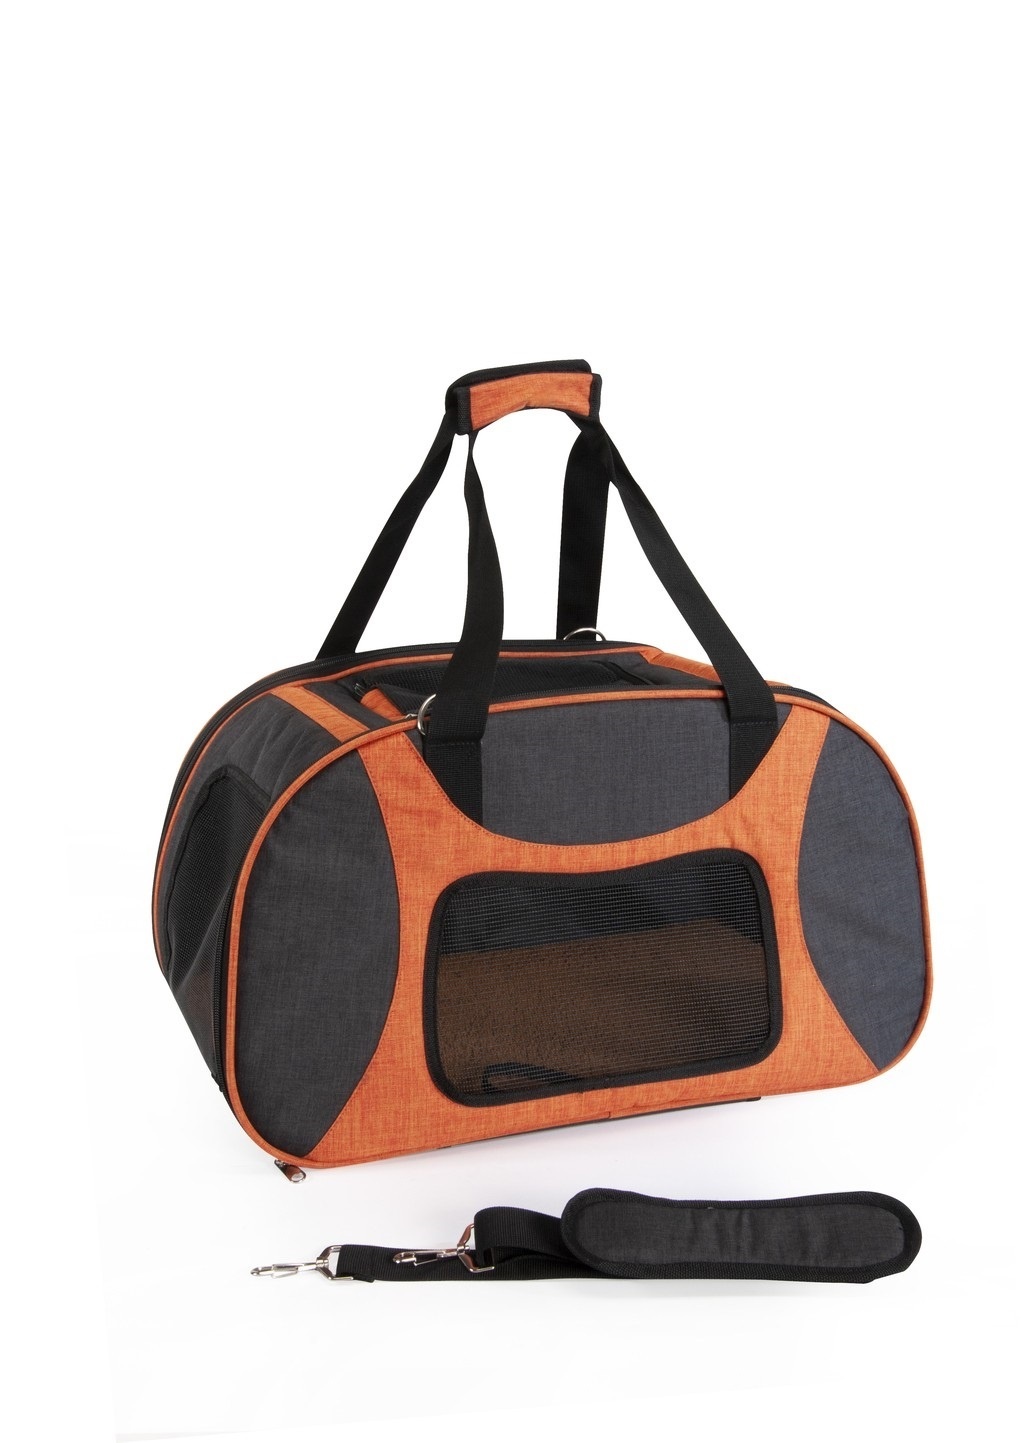 Camon Camon сумка-переноска со съёмной тележкой, 53x31x31 см (3,32 кг) camon camon переноска для домашних животных pratiko зеленая 48x31 5x33 см 1 07 кг